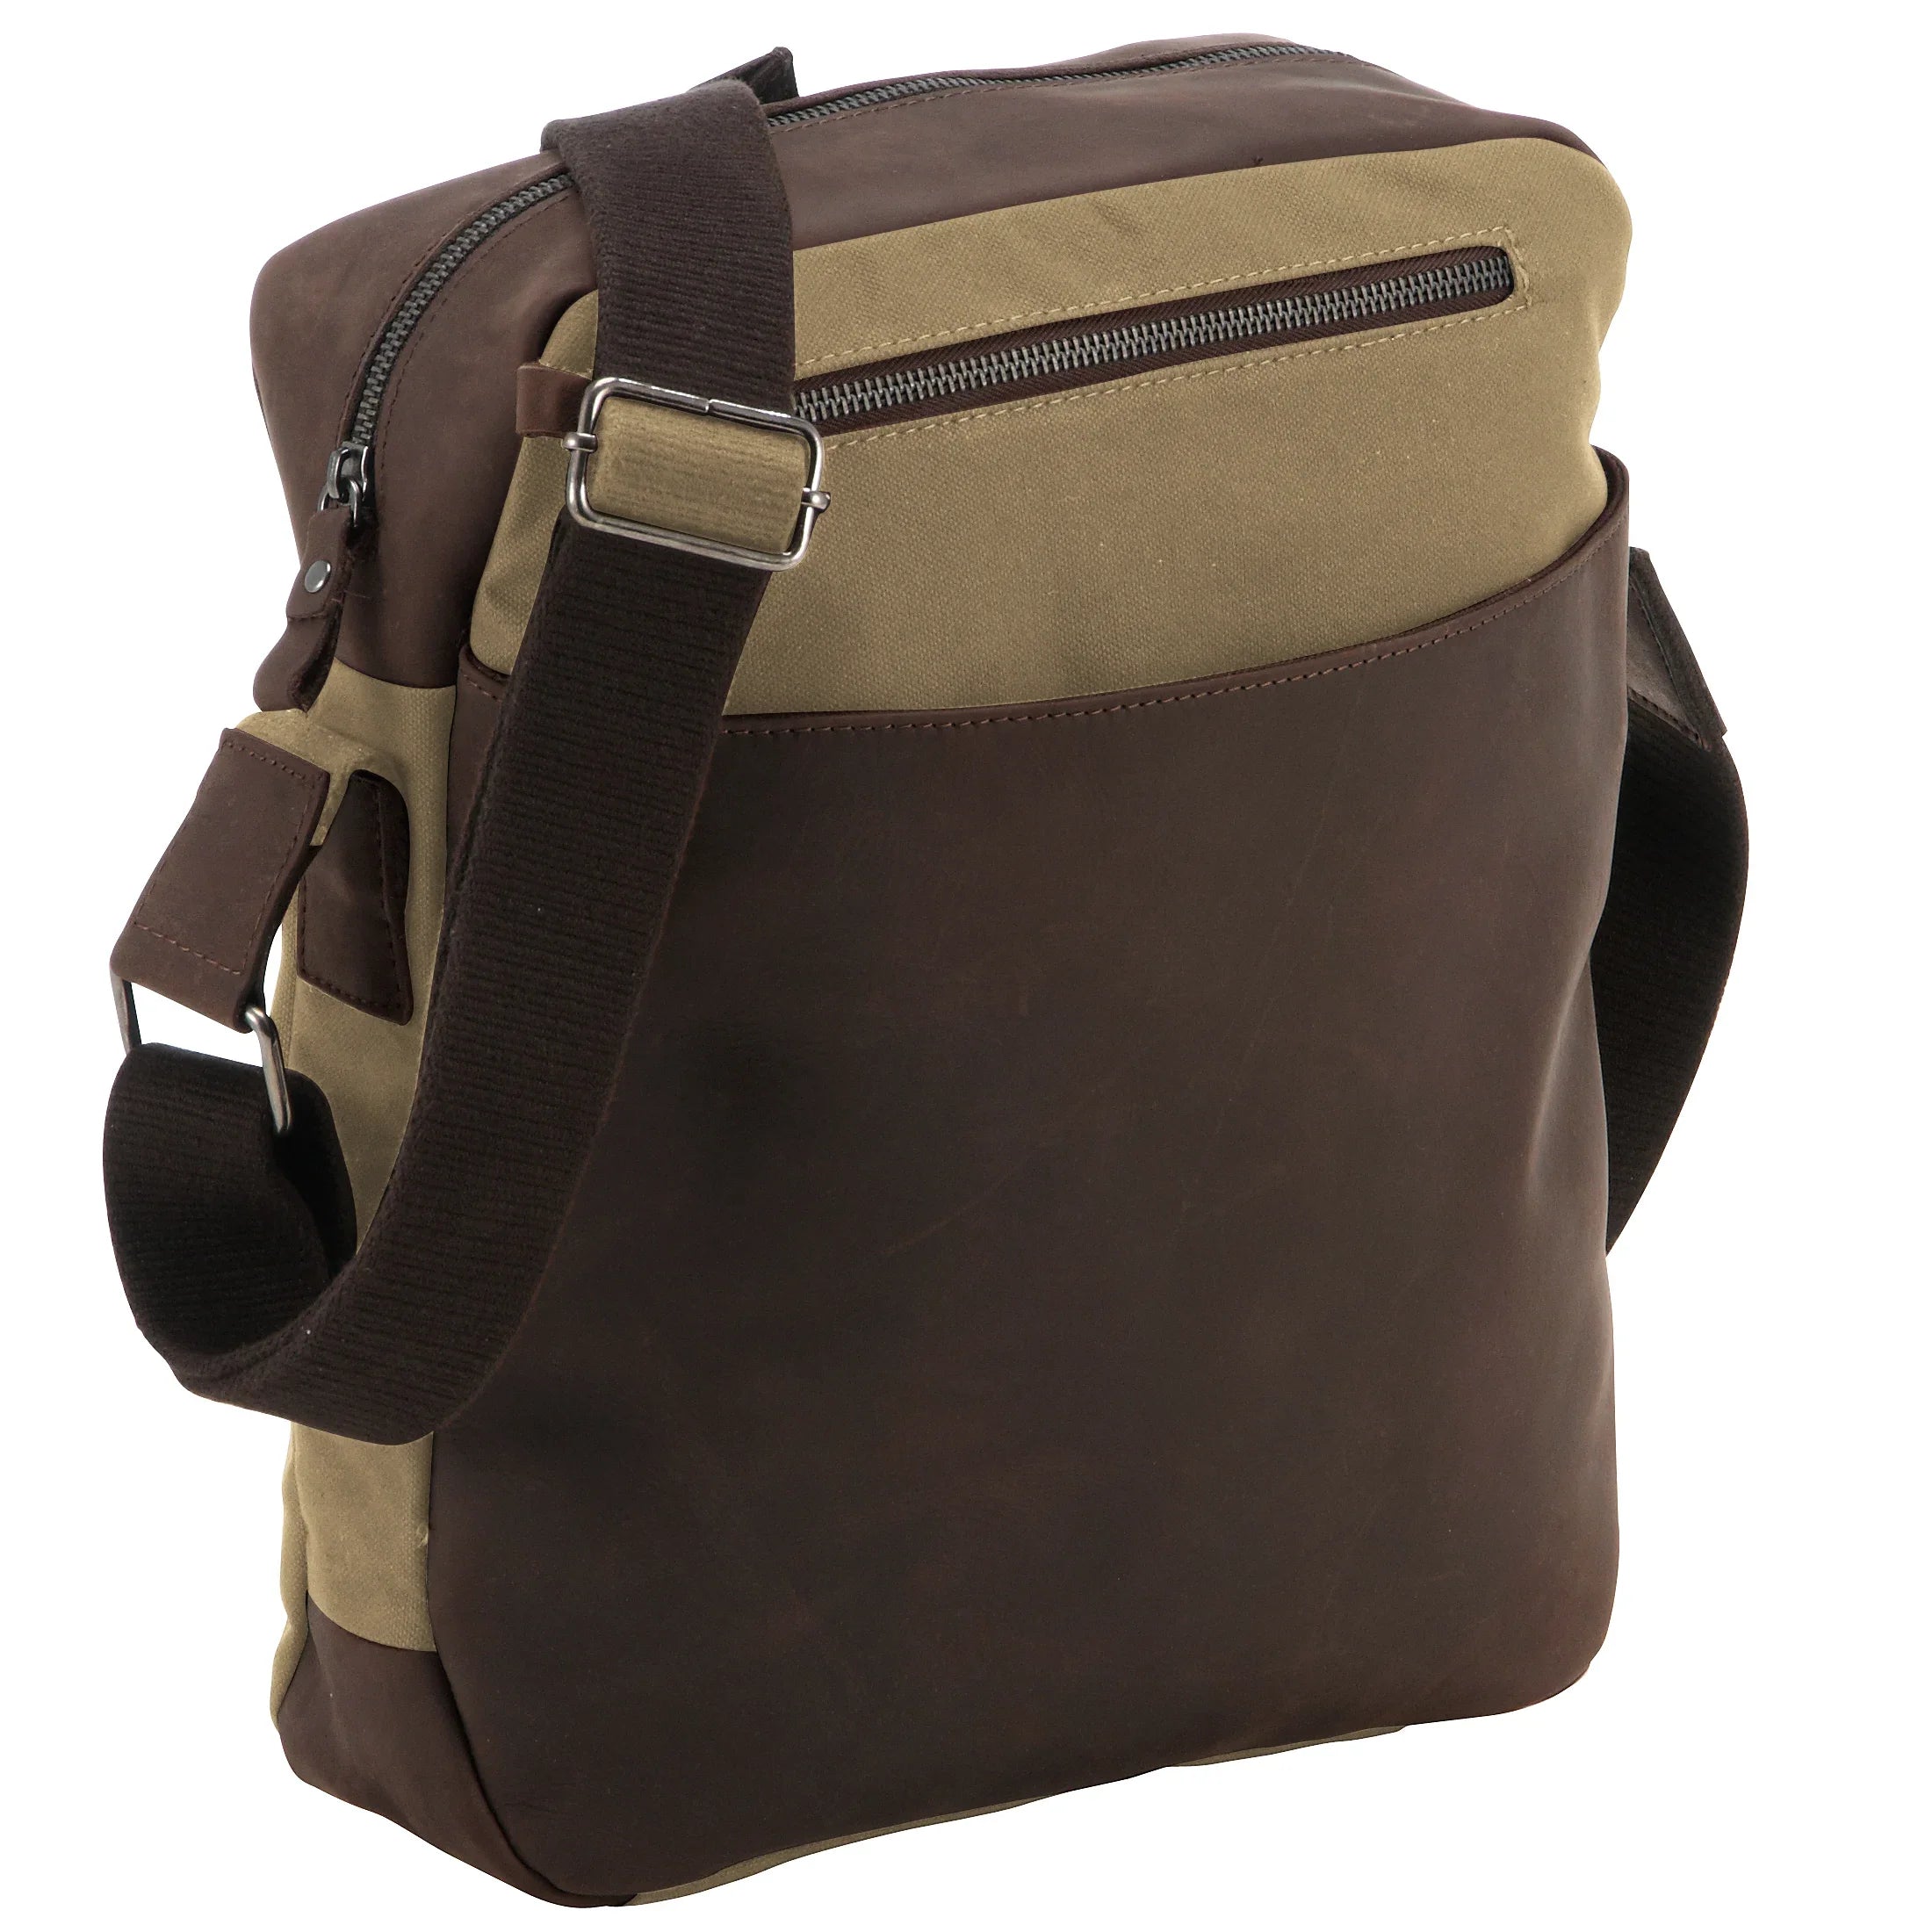 Harolds Waxcan zipper bag shoulder bag 34 cm - sand/brown